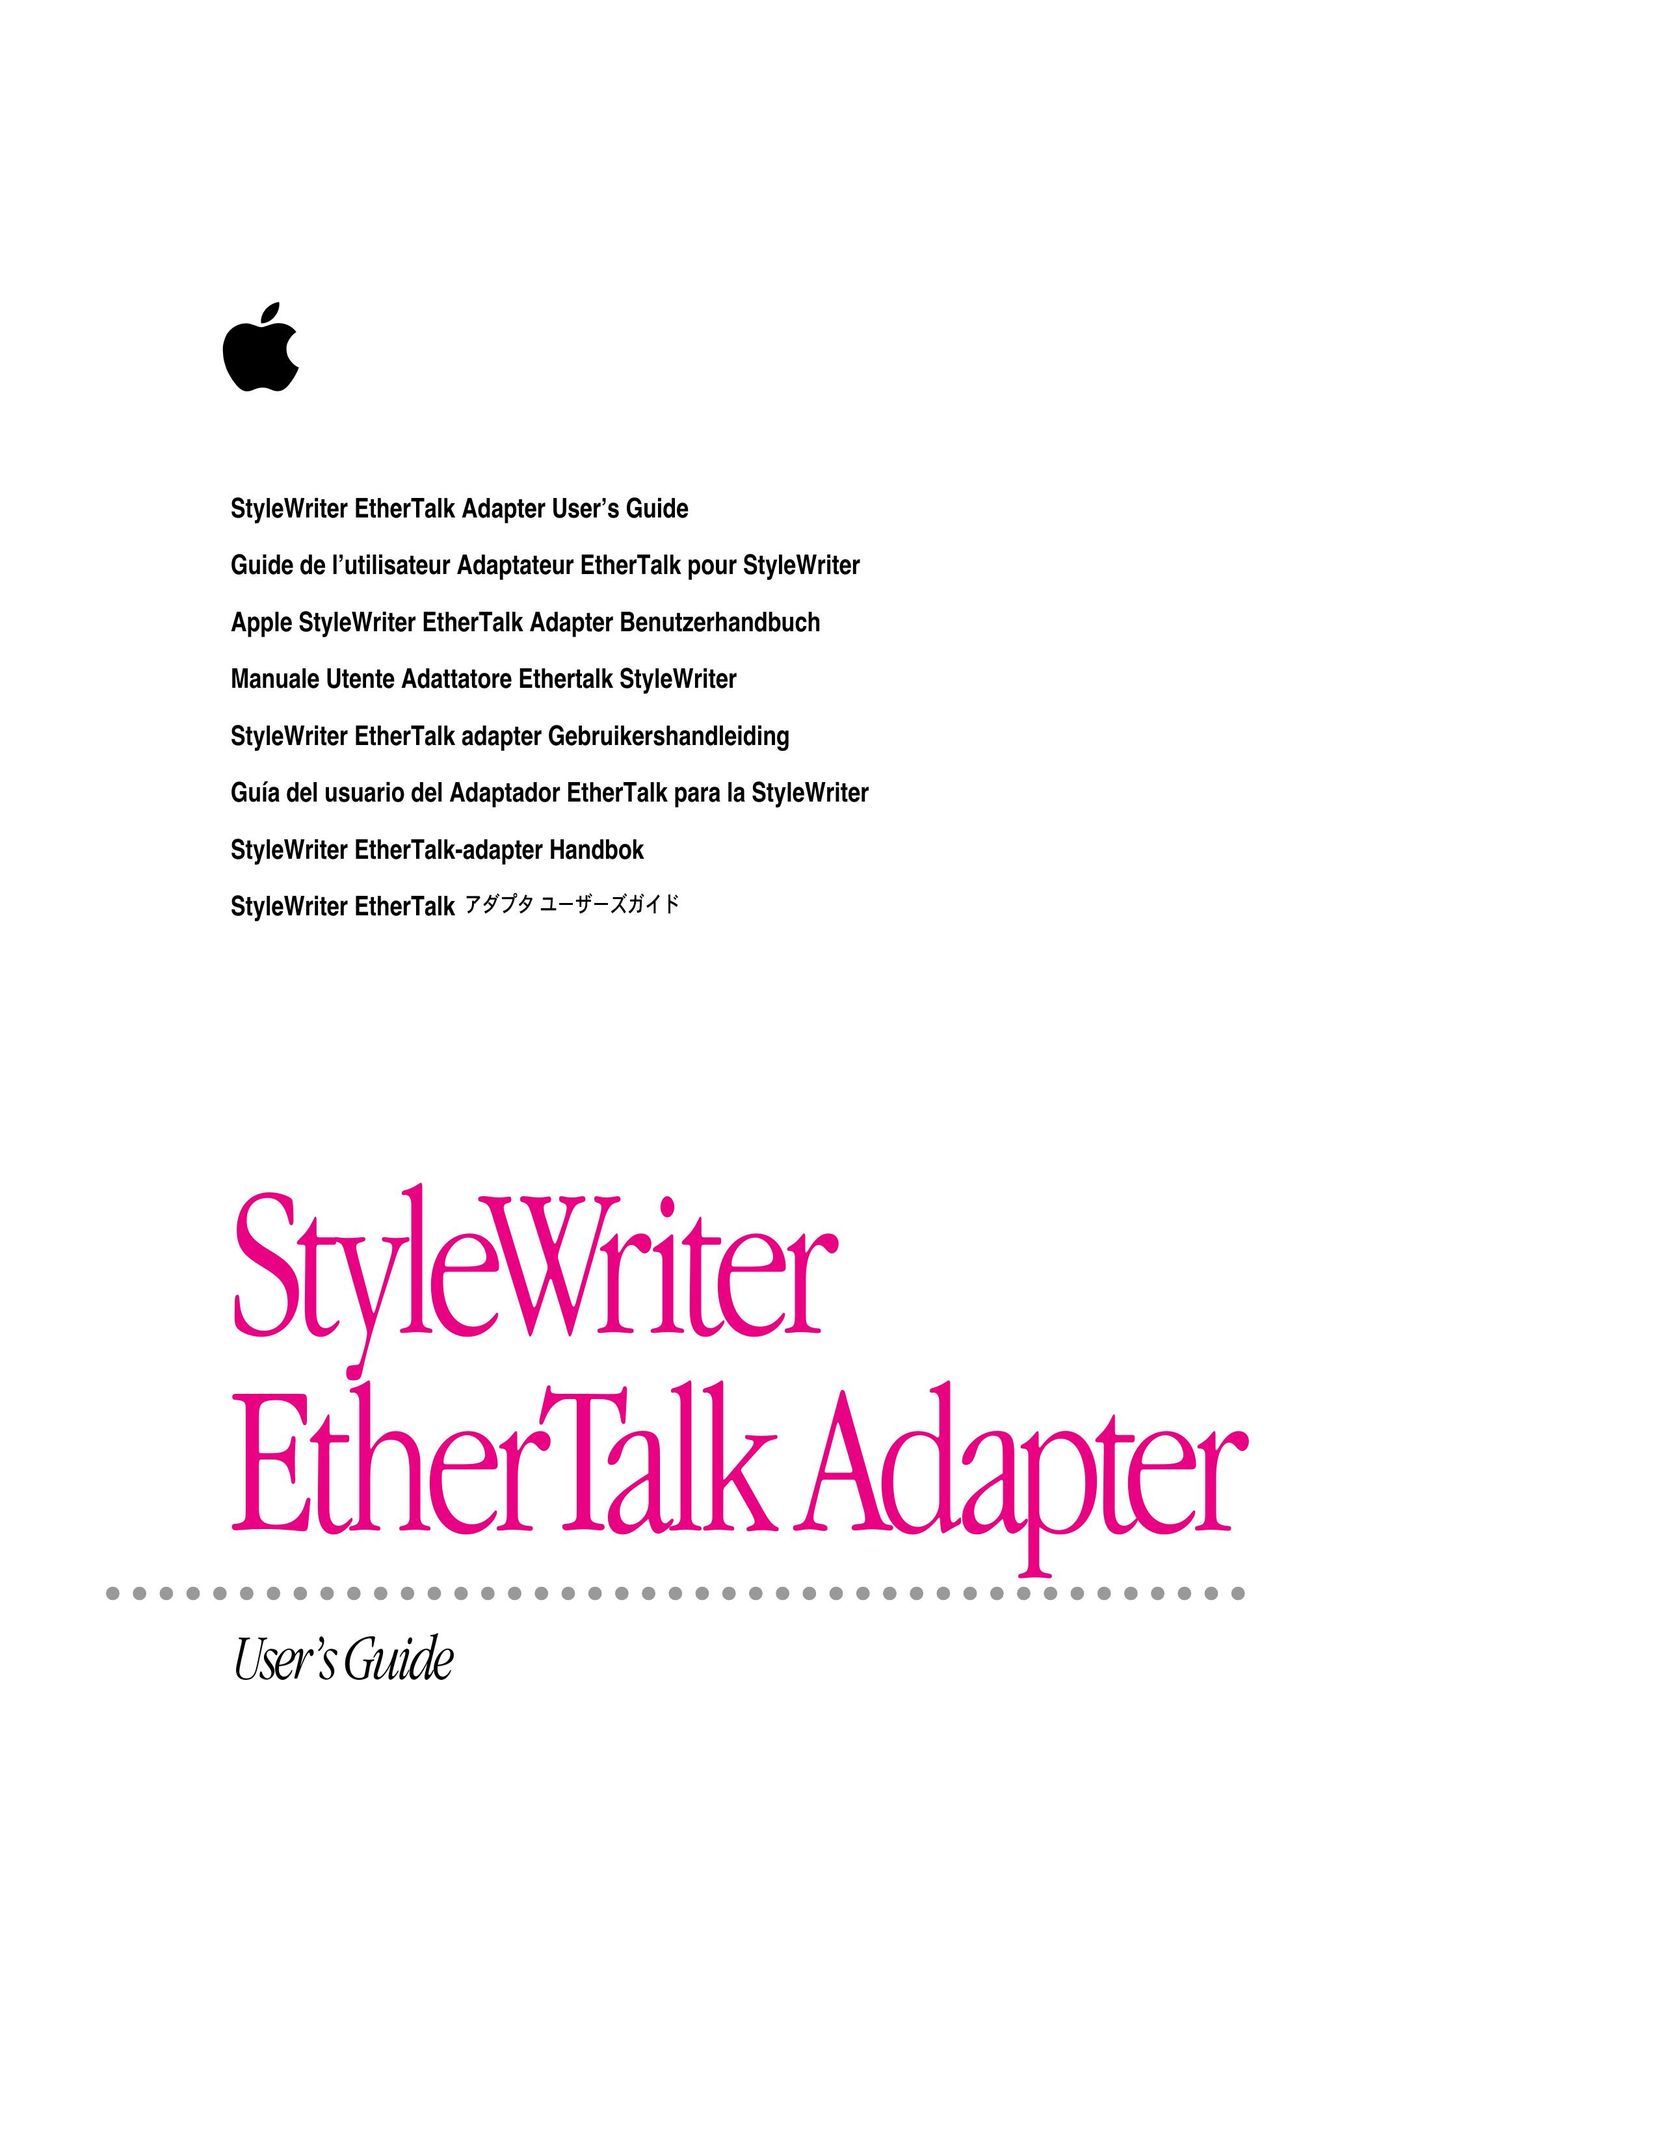 Apple II Speaker User Manual